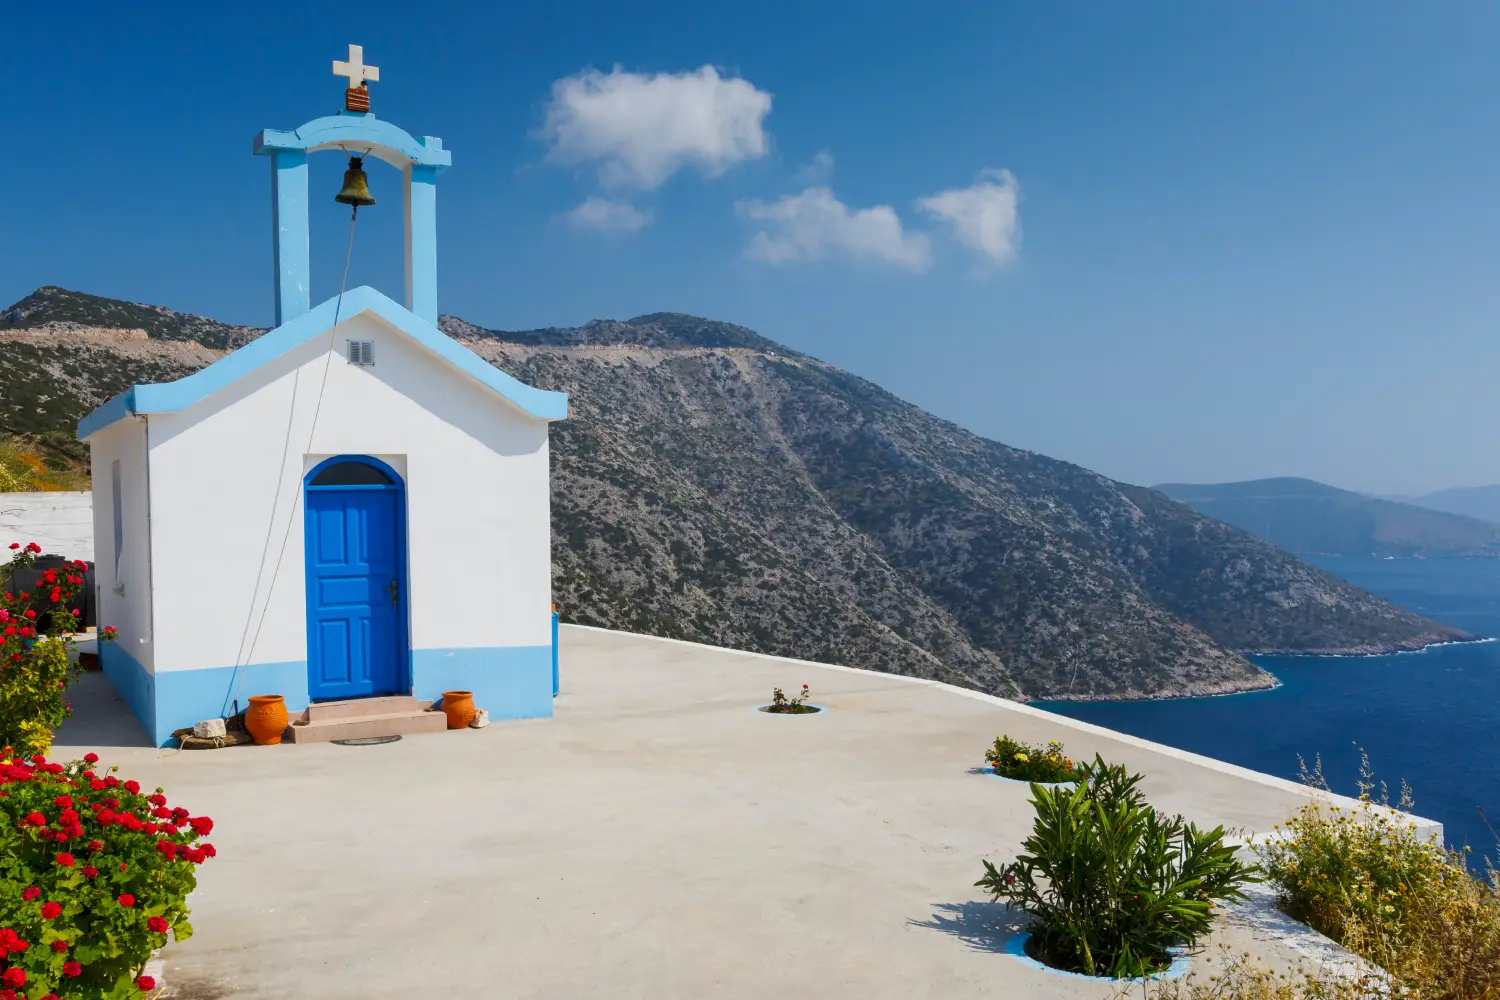 Ferry to Chrisomilia - Church near Chrysomilia village on Fourni island, Greece.